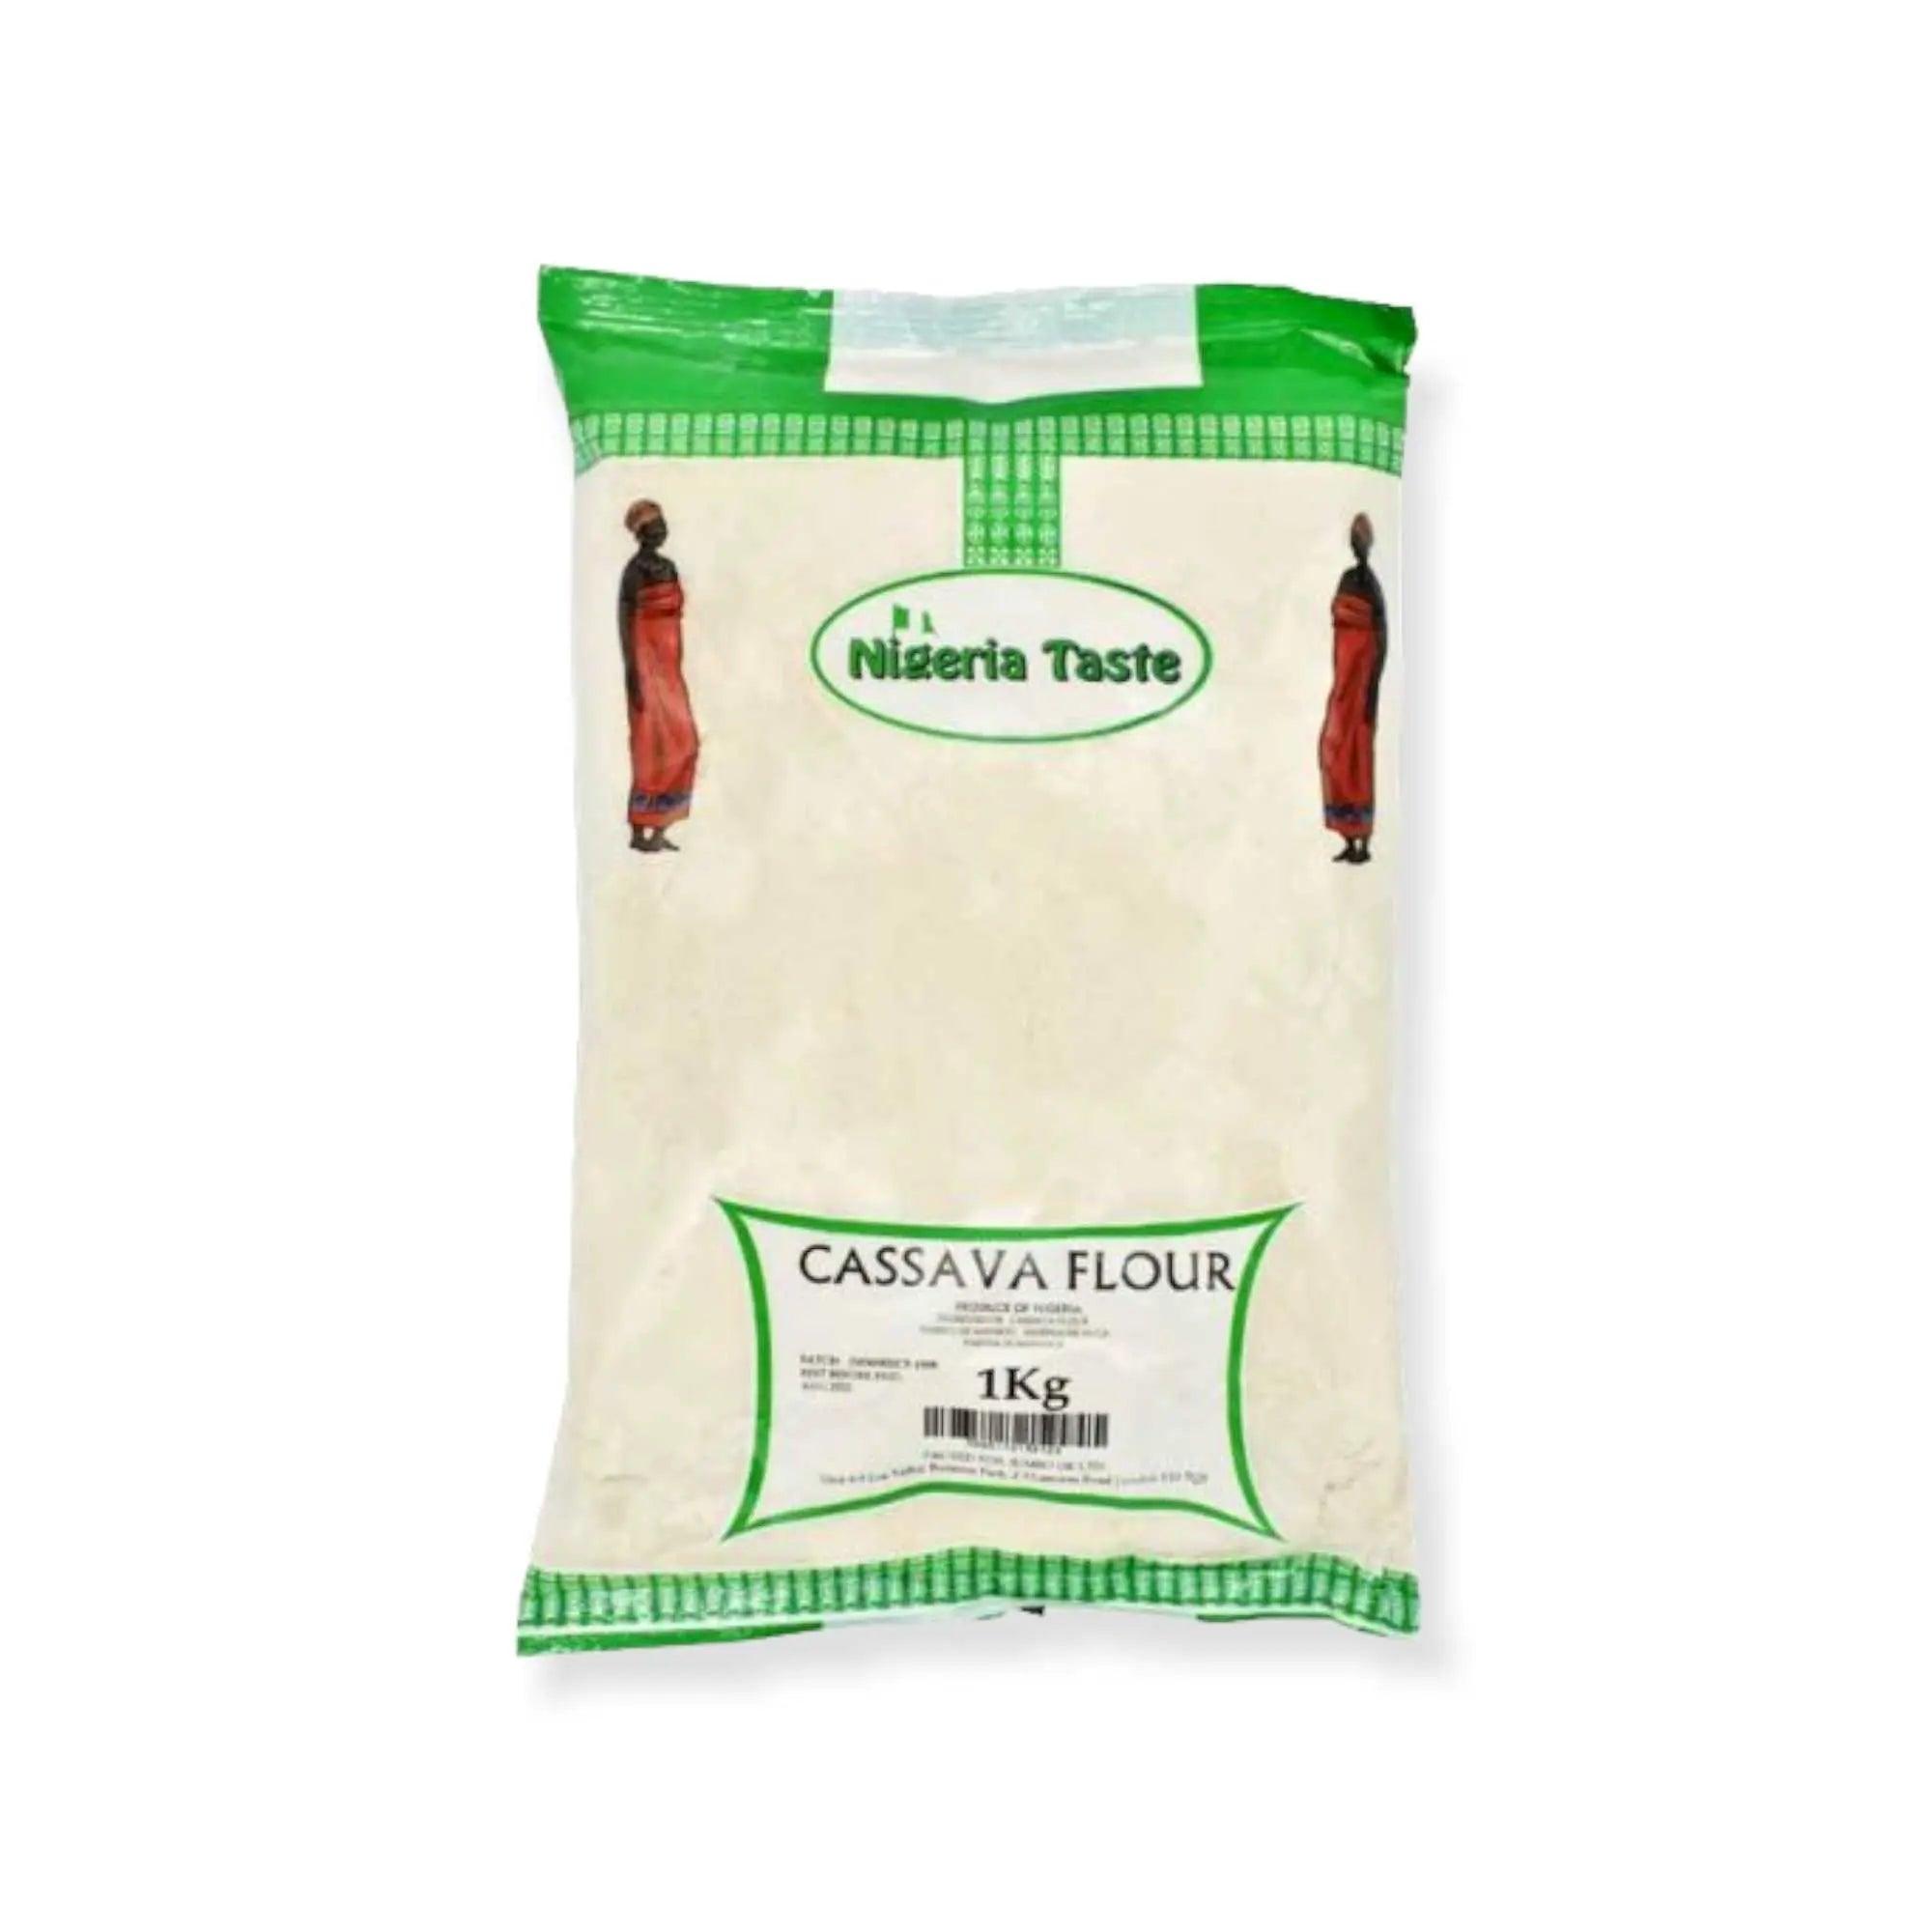 Nigeria Taste Wheat Flour 1kg - Honesty Sales U.K